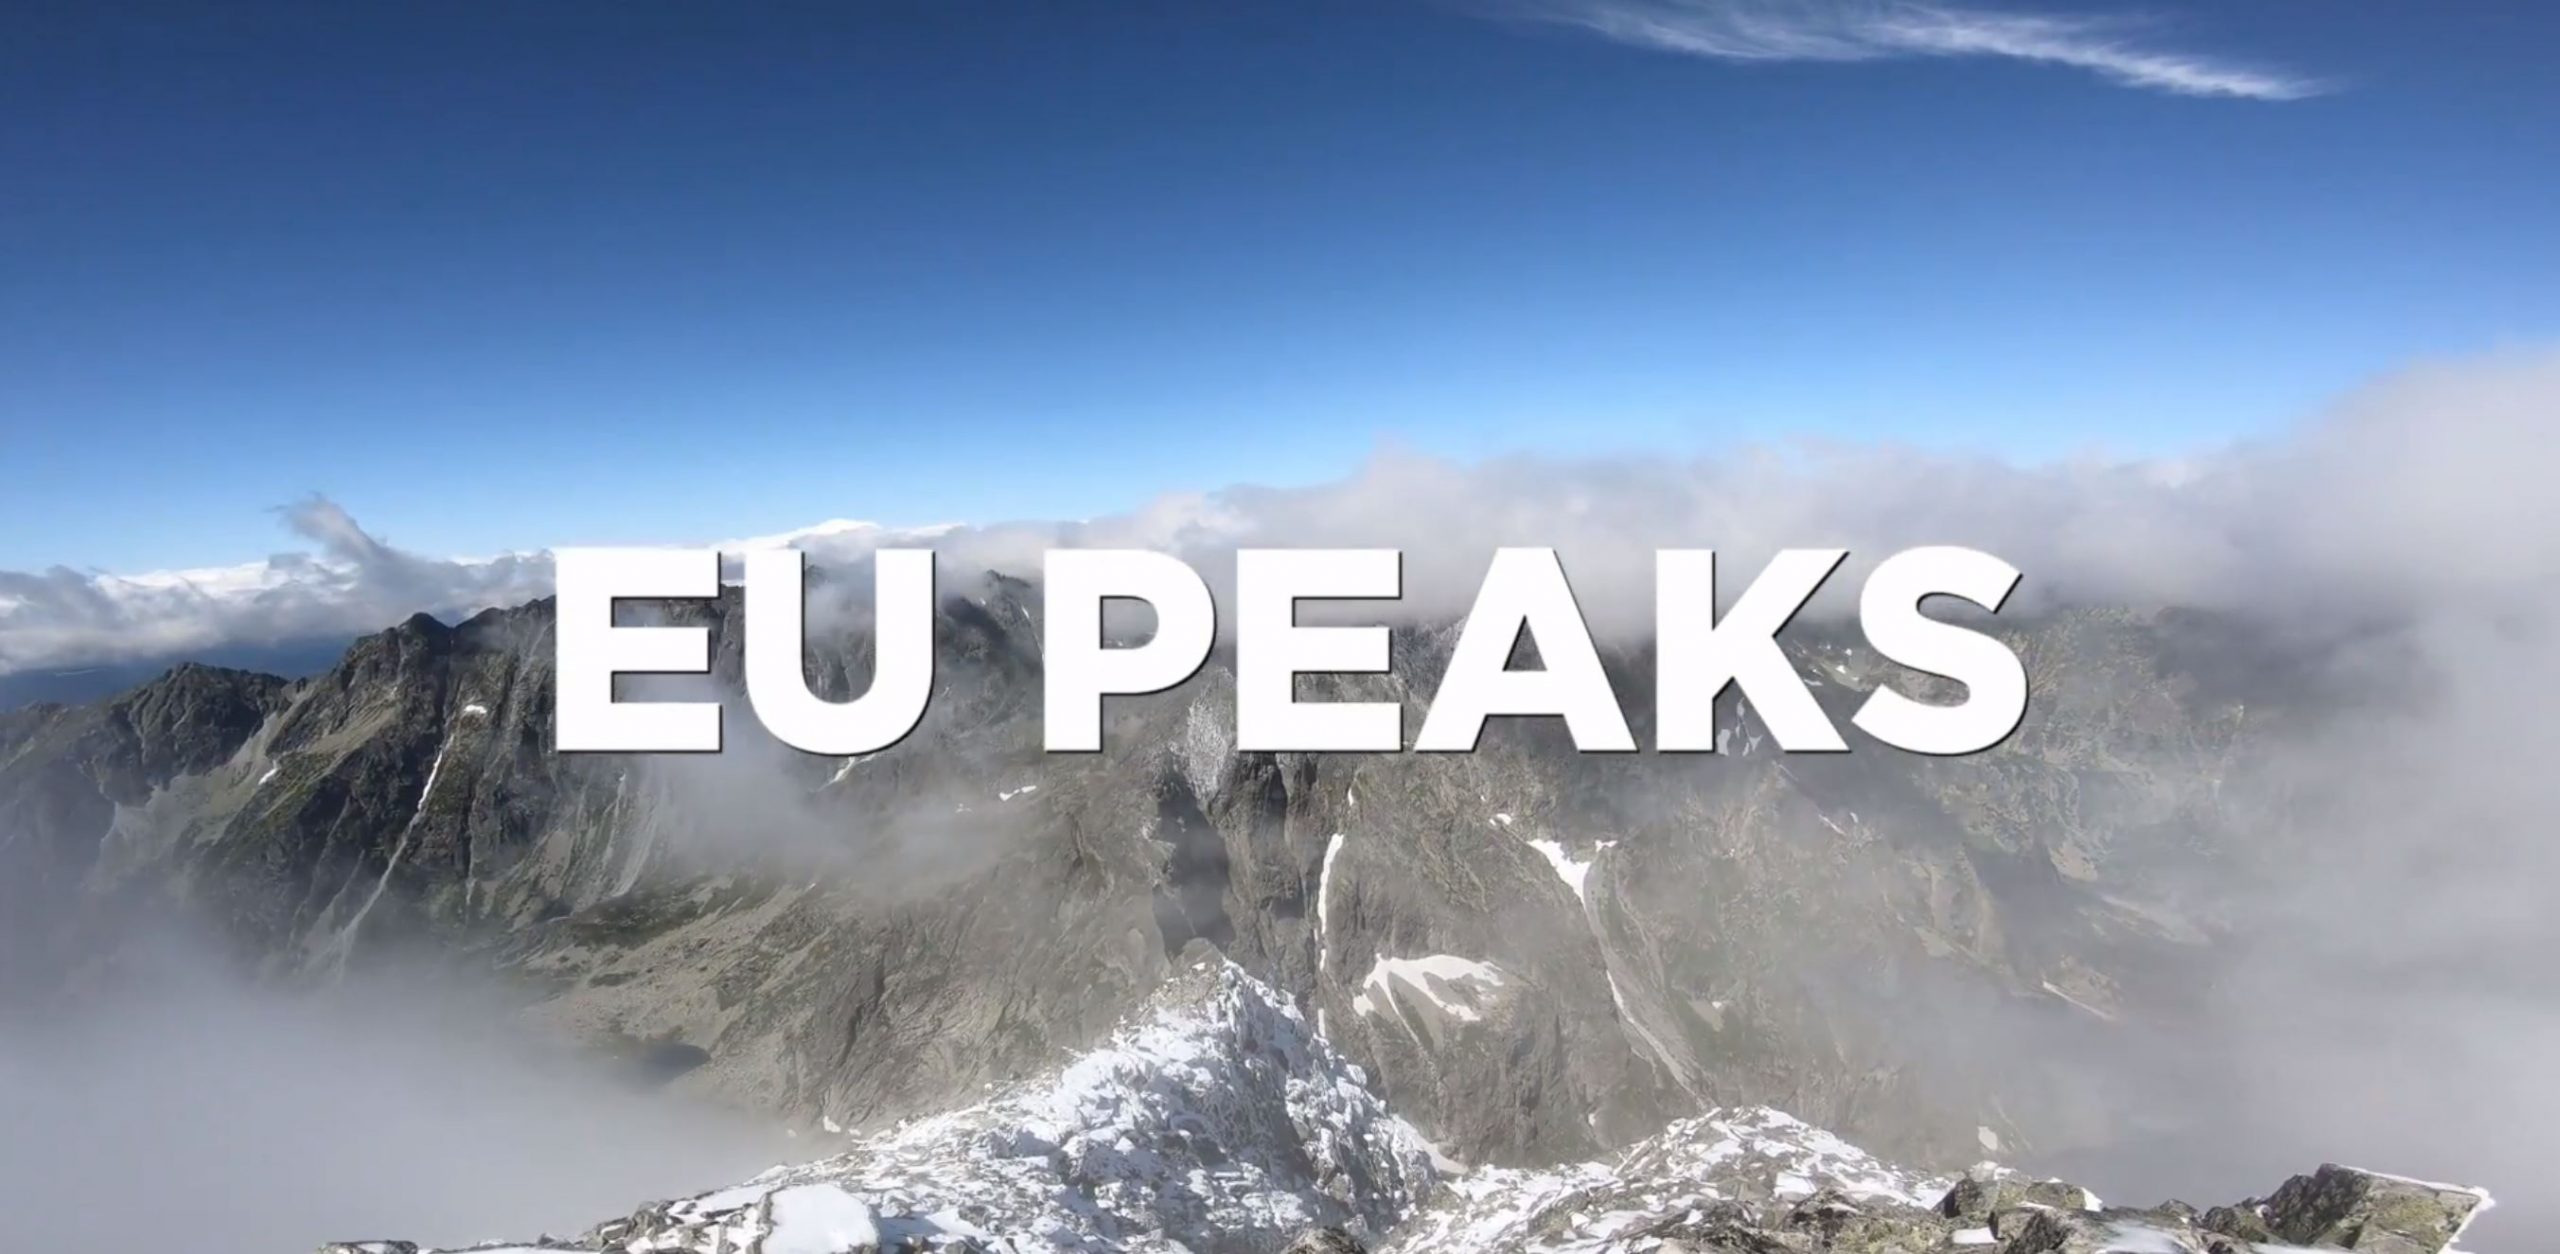 EU Peaks short film out!